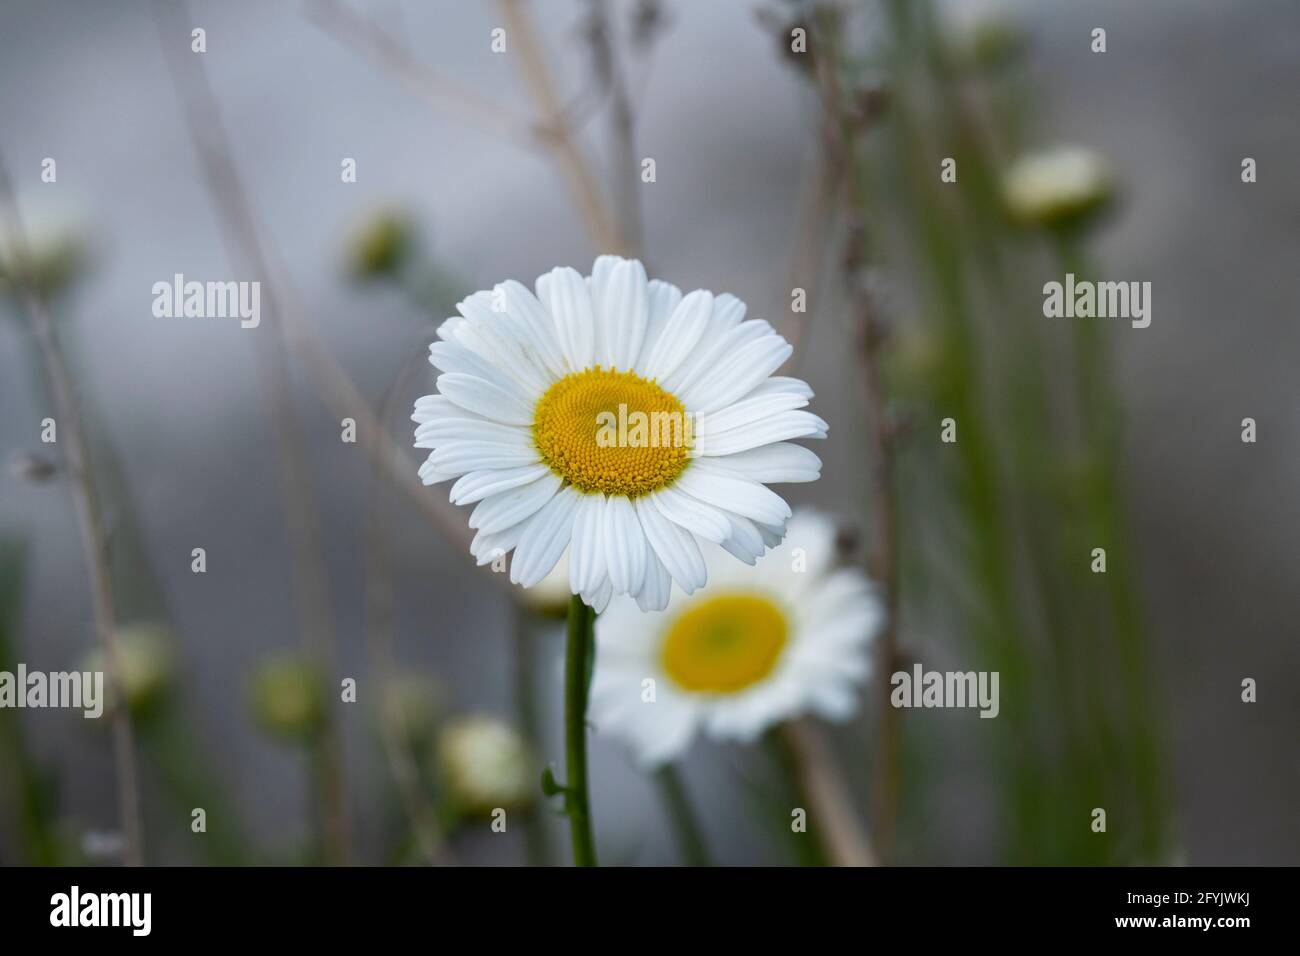 Daisy Flower, Daisy comune, Daisy inglese (Bellis perennis) Foto Stock